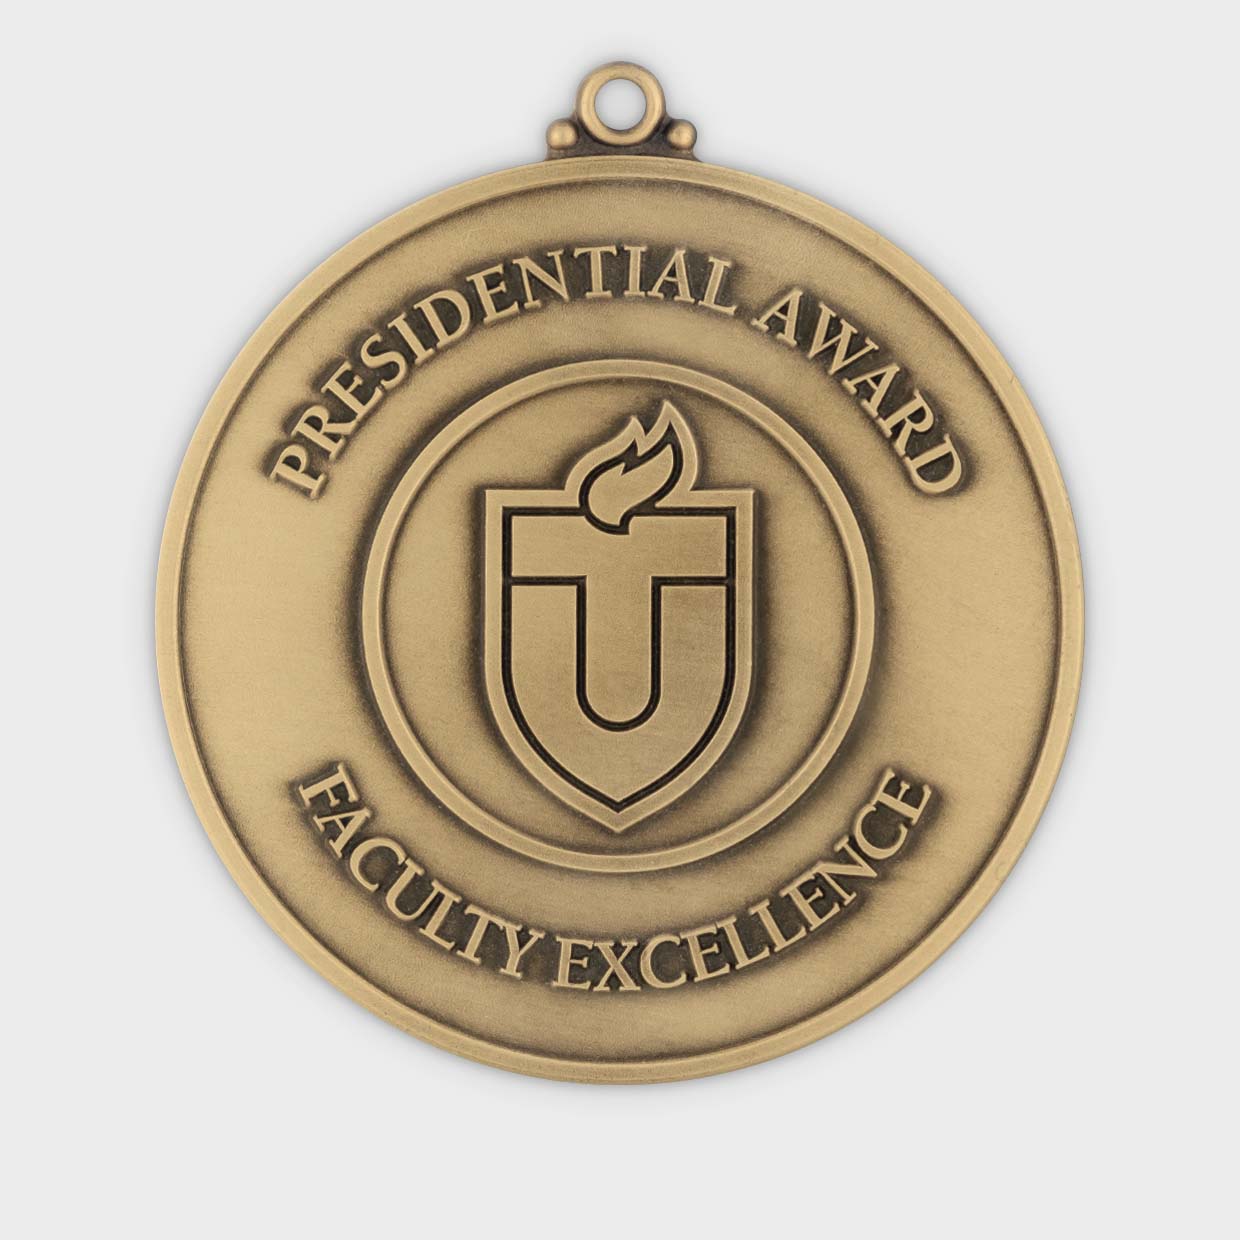 Presidential Award Medal Obverse